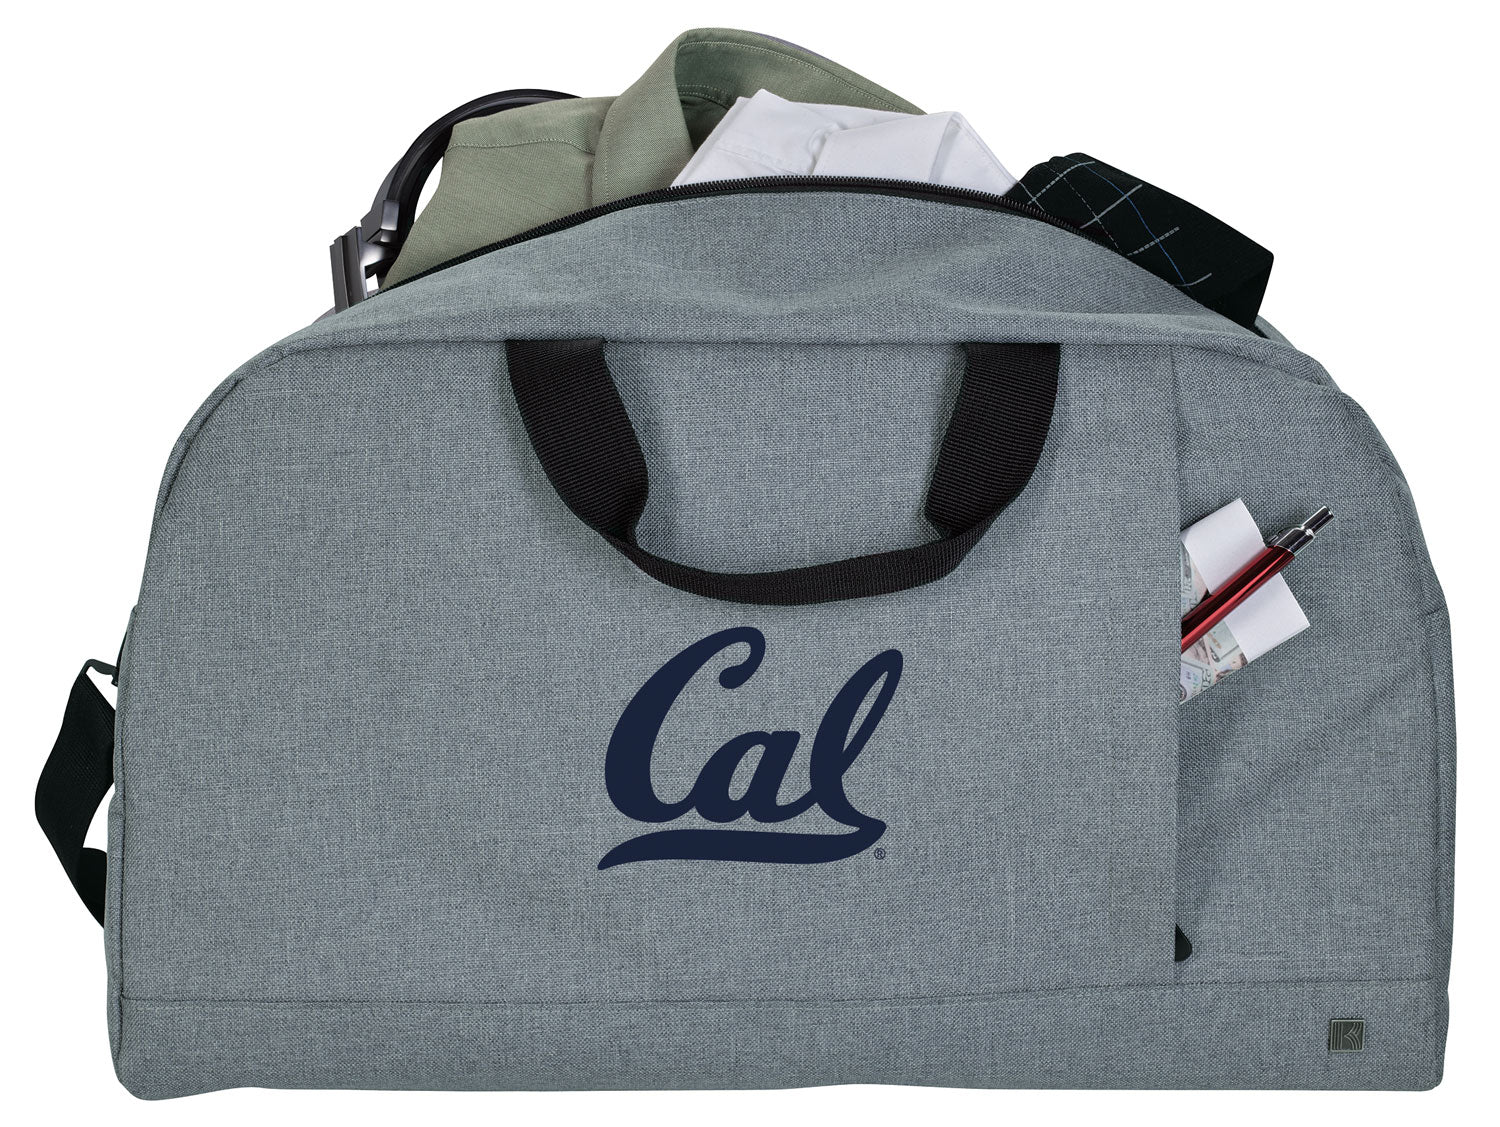 U.C. Berkeley Cal duffel bag-Gray-Shop College Wear